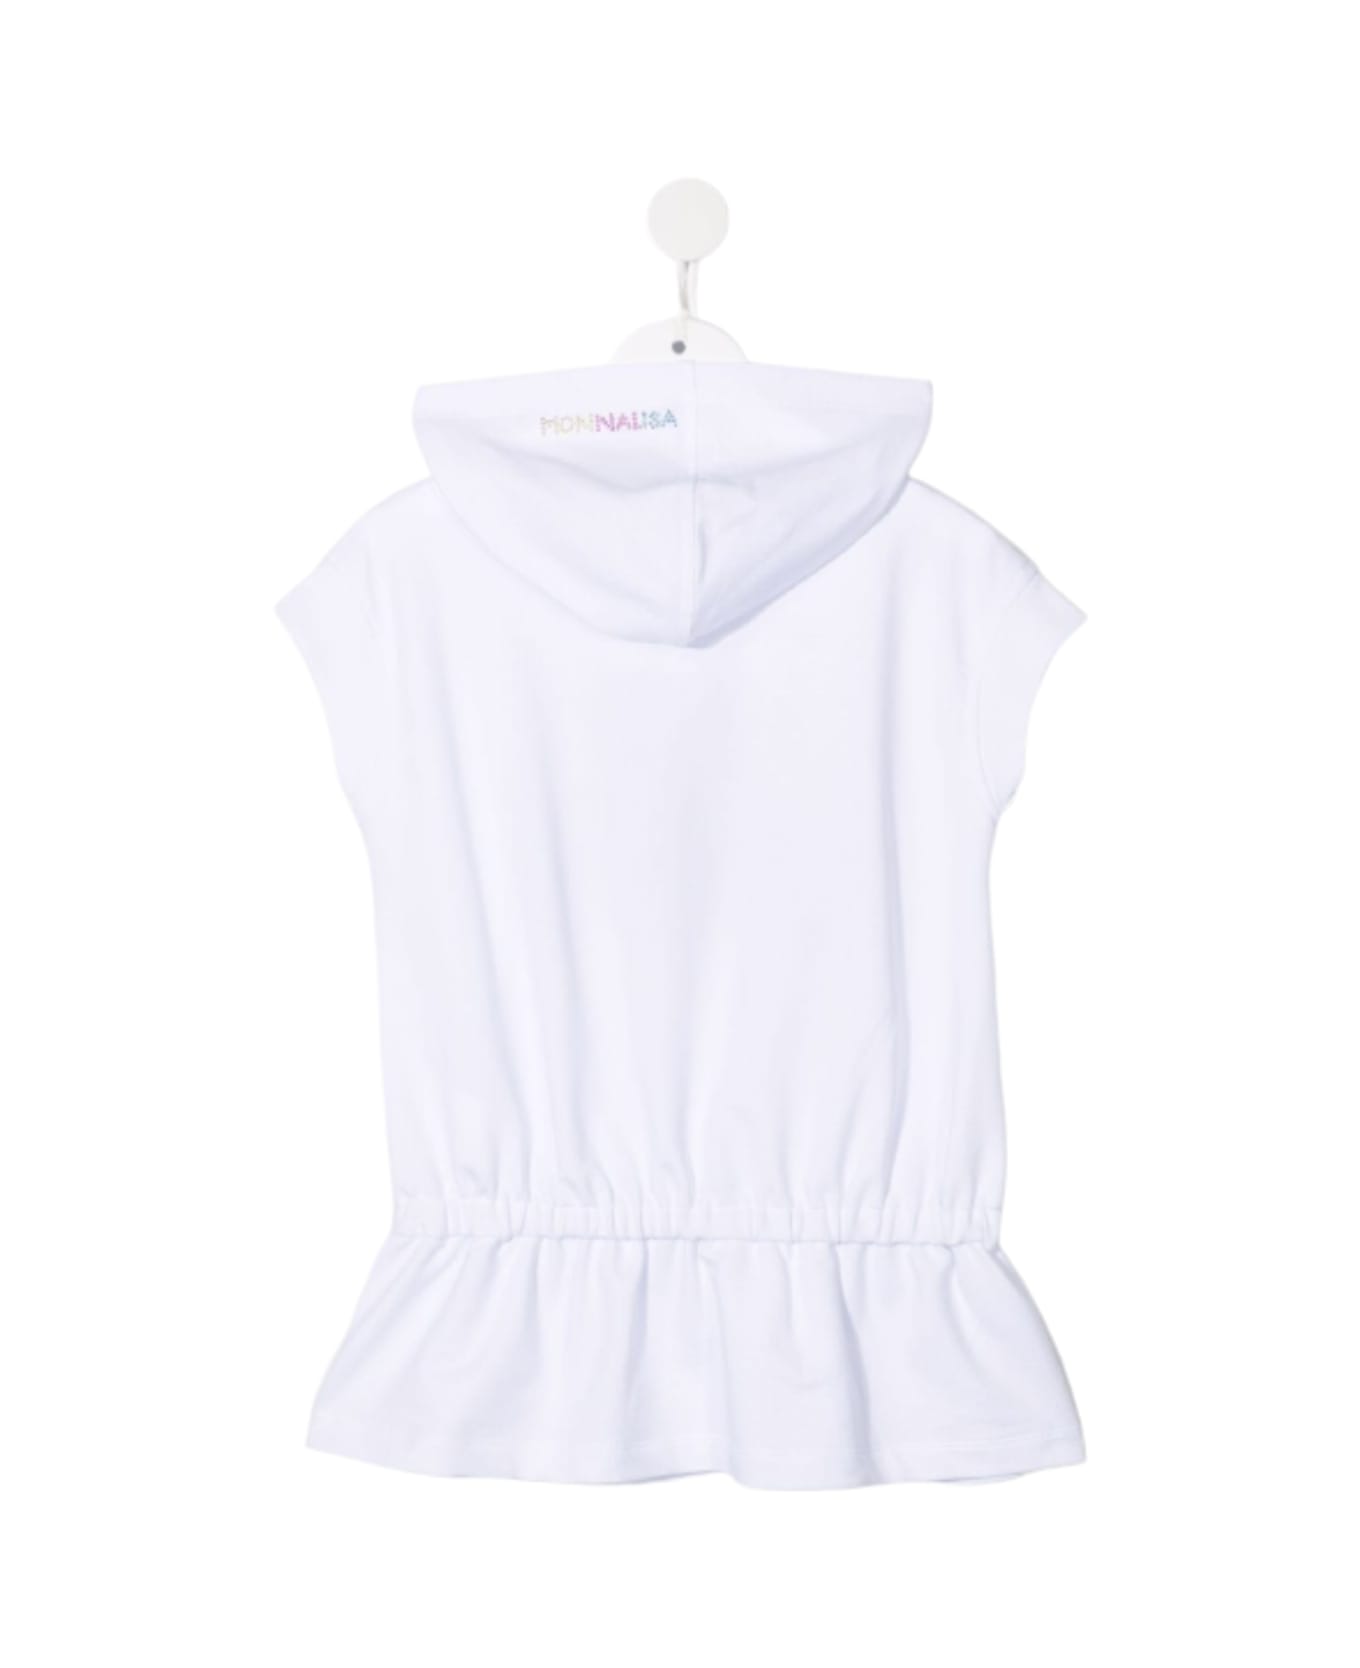 Monnalisa Kids Girl's White Jersey Dress With Lola And Bunny Logo - White